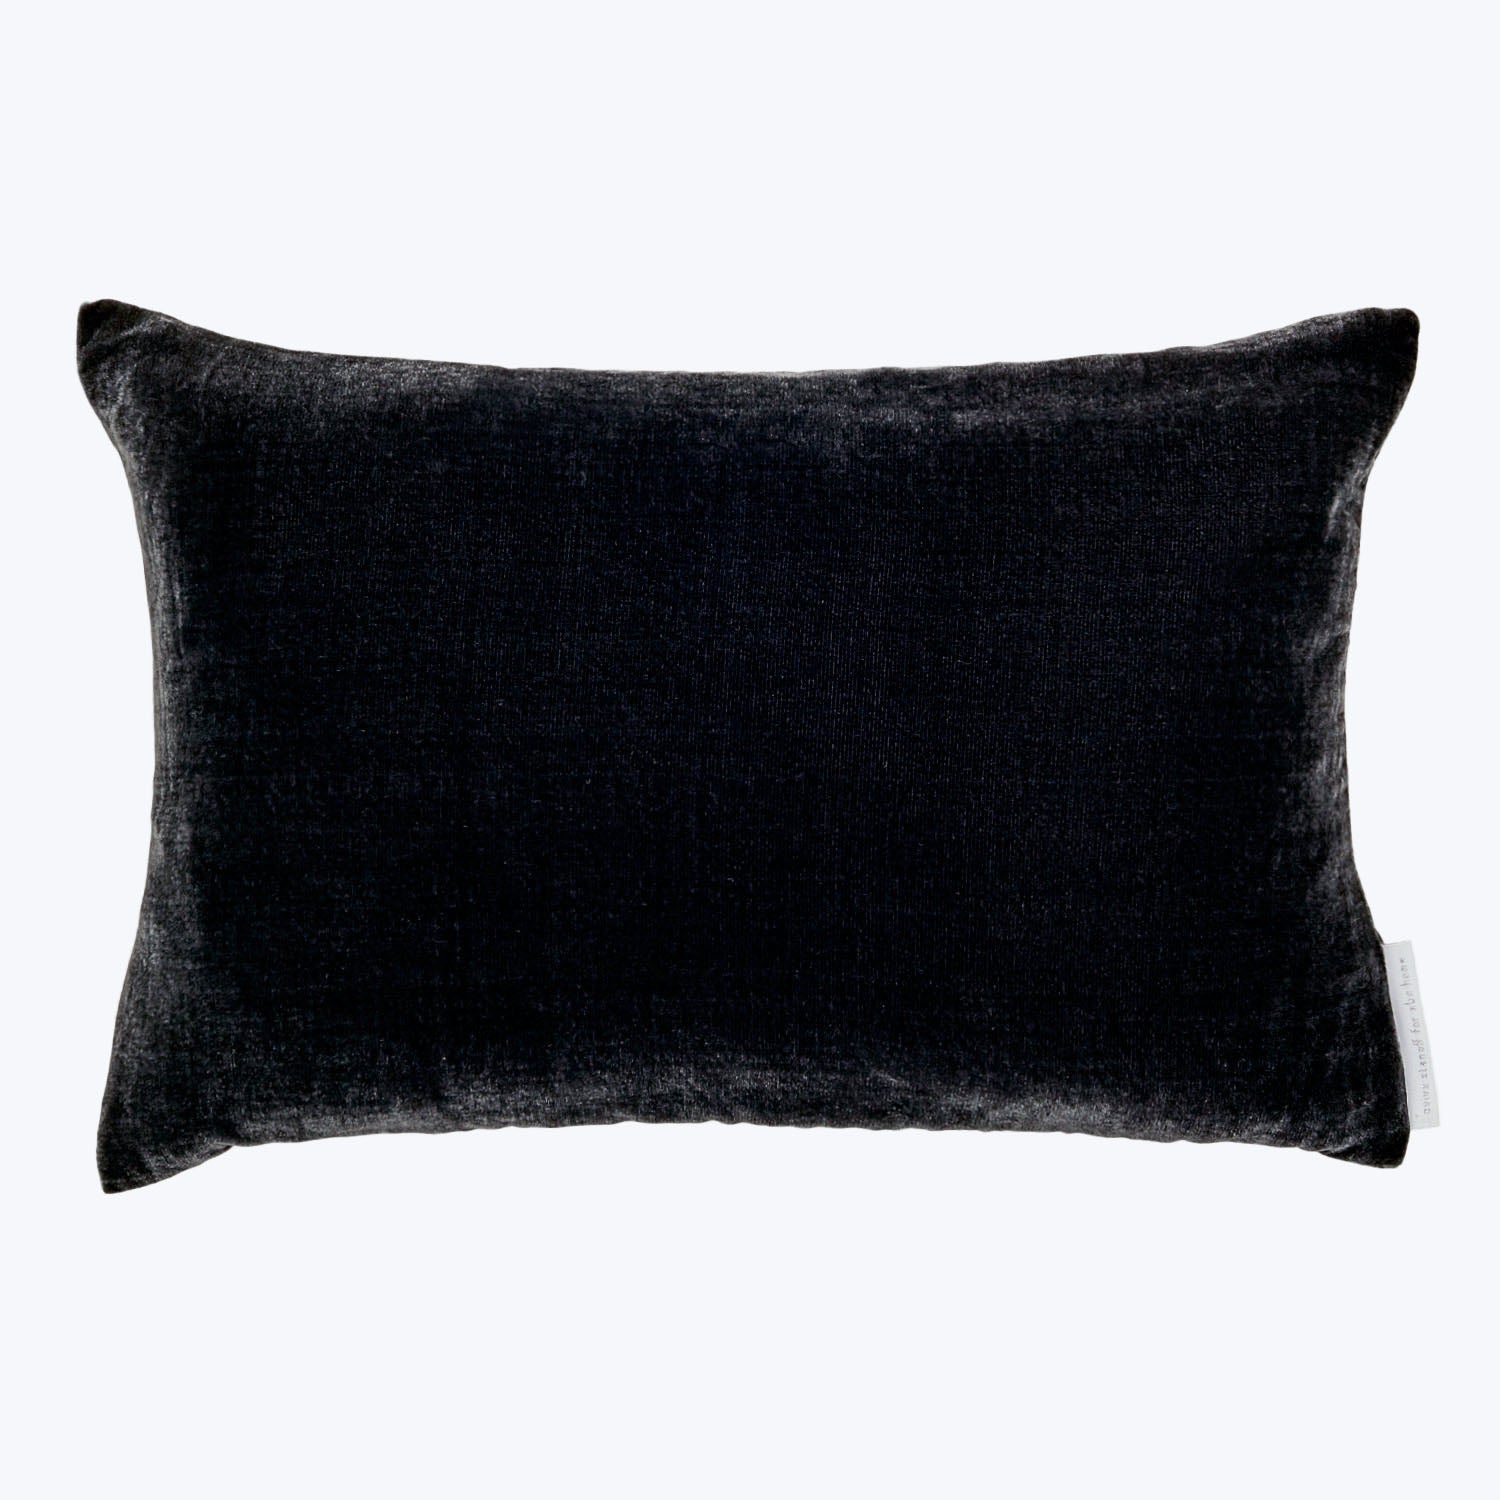 Plush, velvety rectangular pillow in dark color with clean edges.